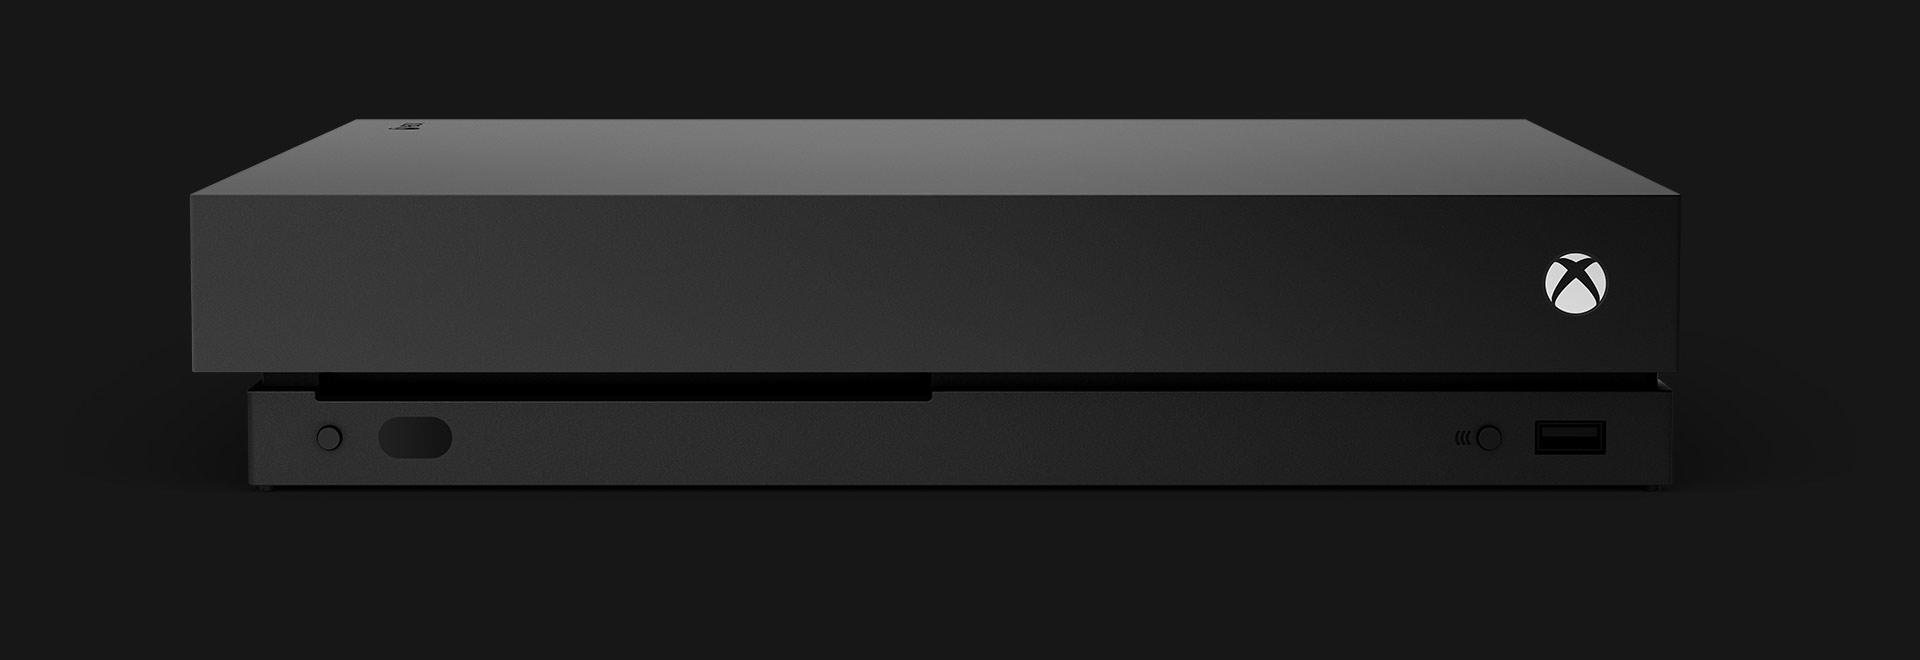 Framsidan av en Xbox One X-konsol.